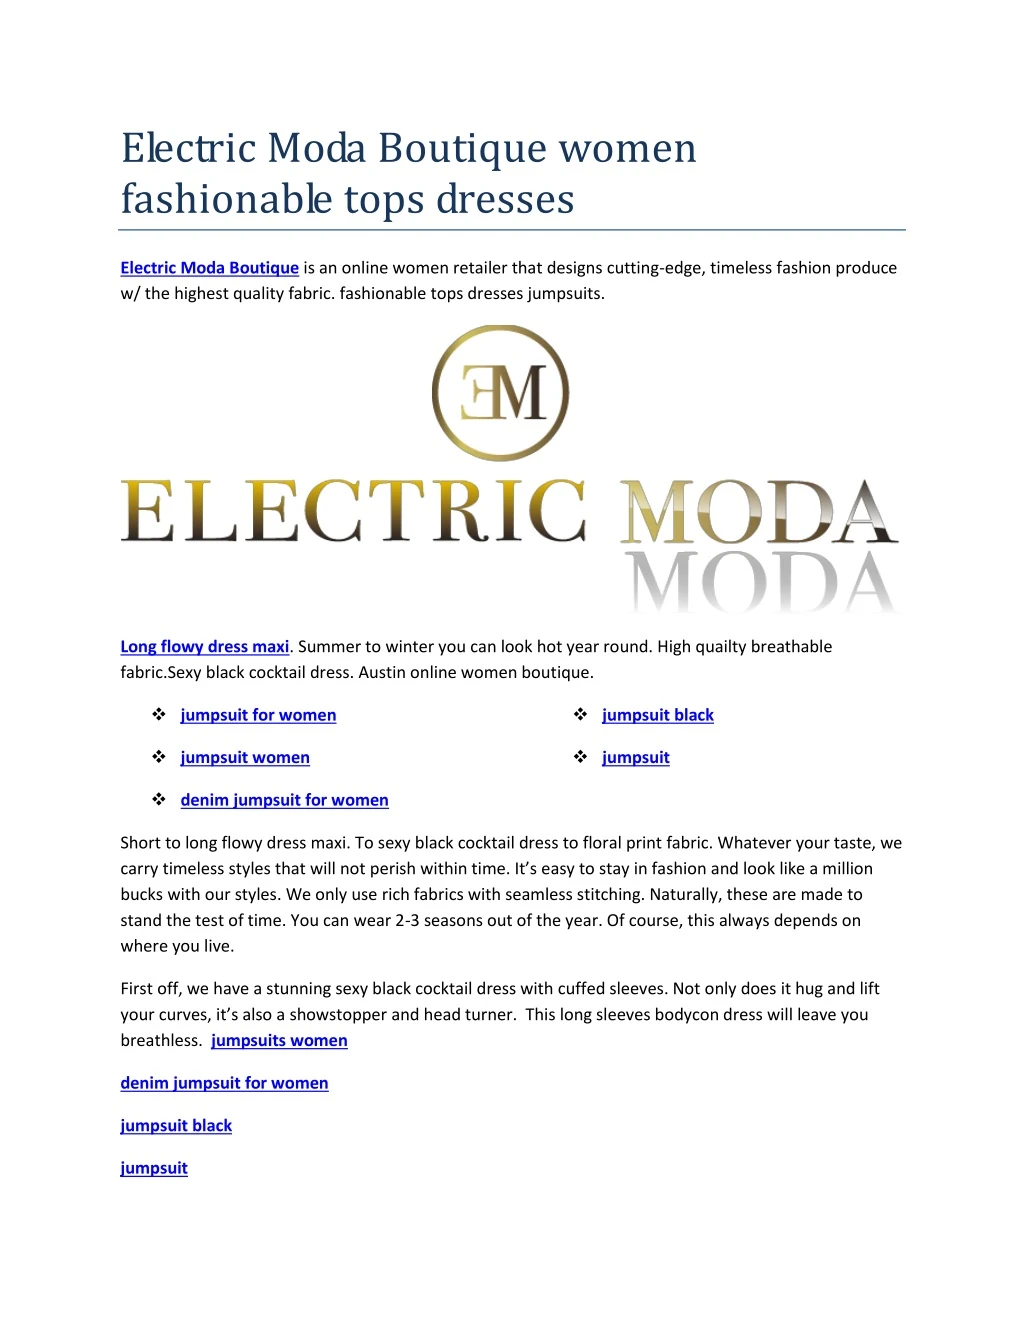 electric moda boutique women fashionable tops